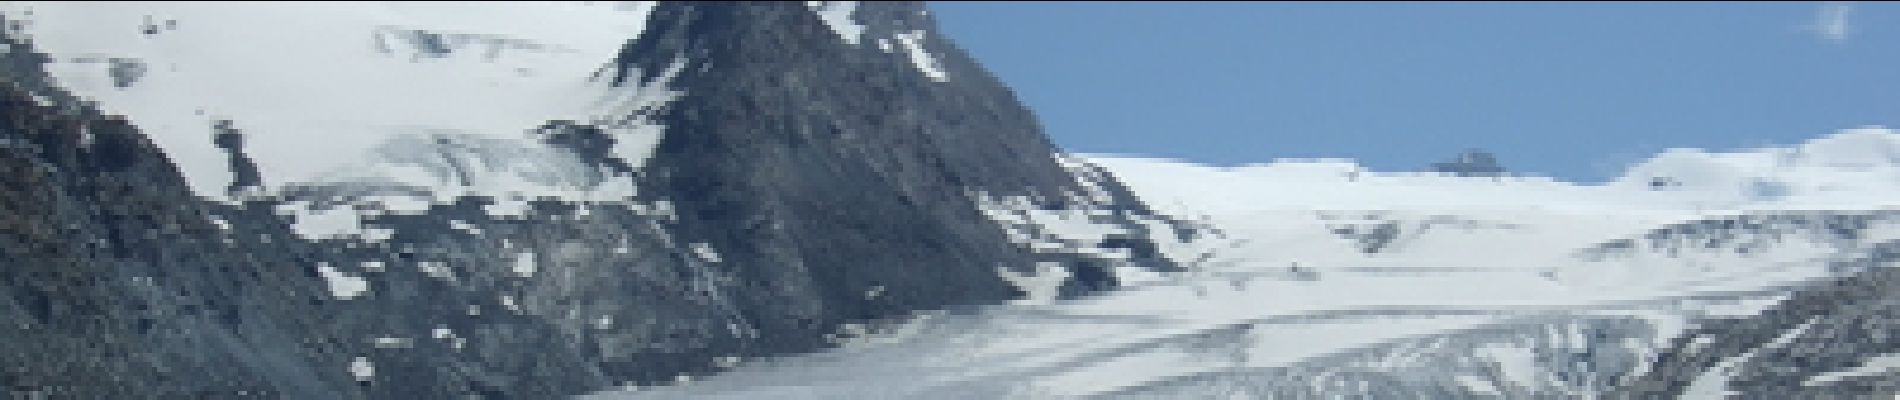 POI Zermatt - glacier de Findel - Photo